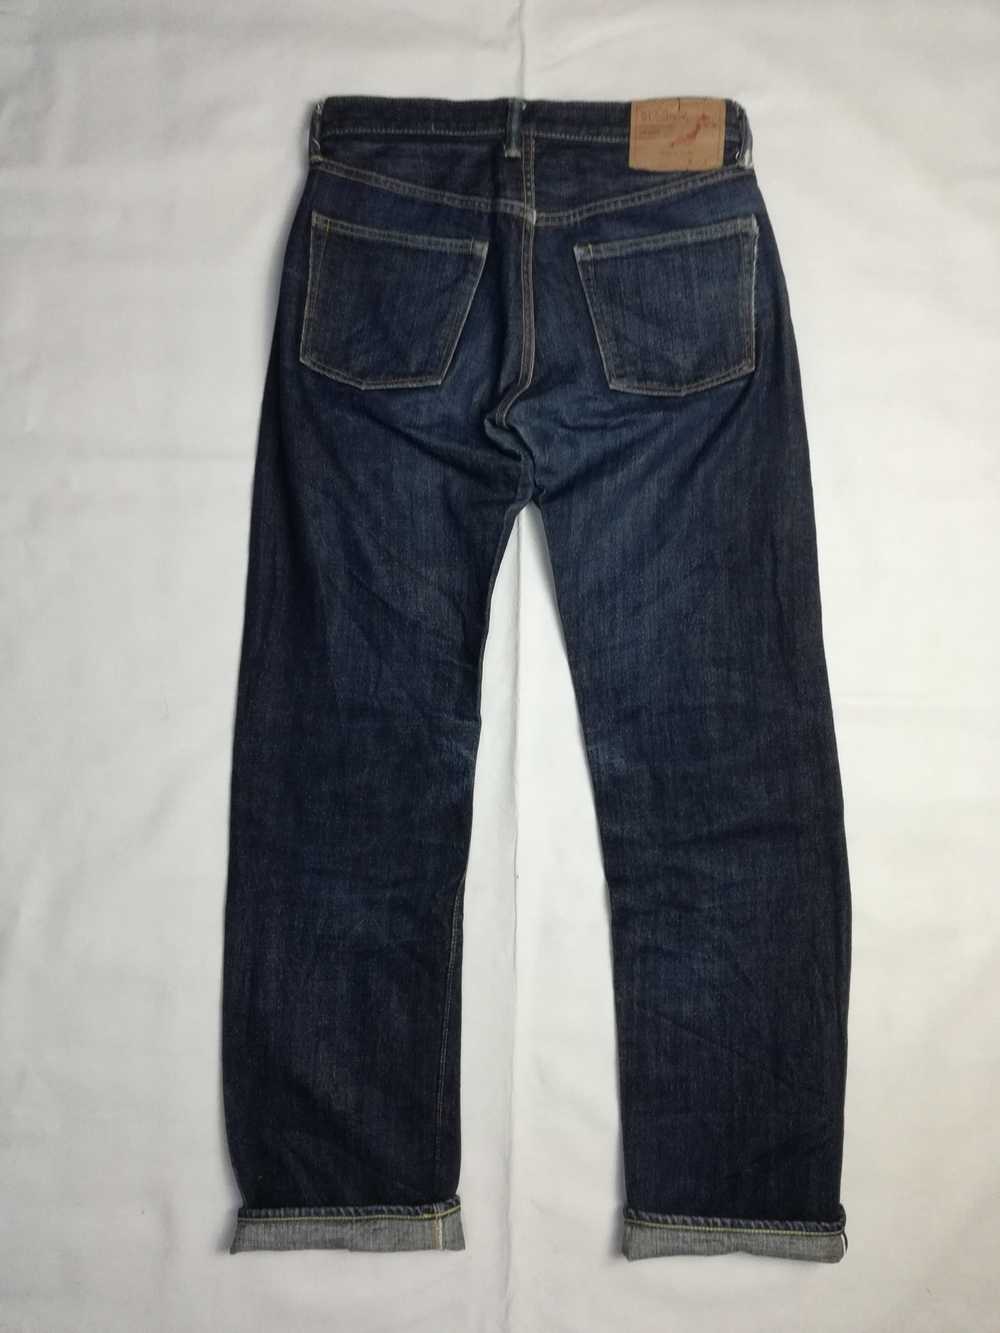 Orslow Orslow Selvedge Denim Jeans - image 6